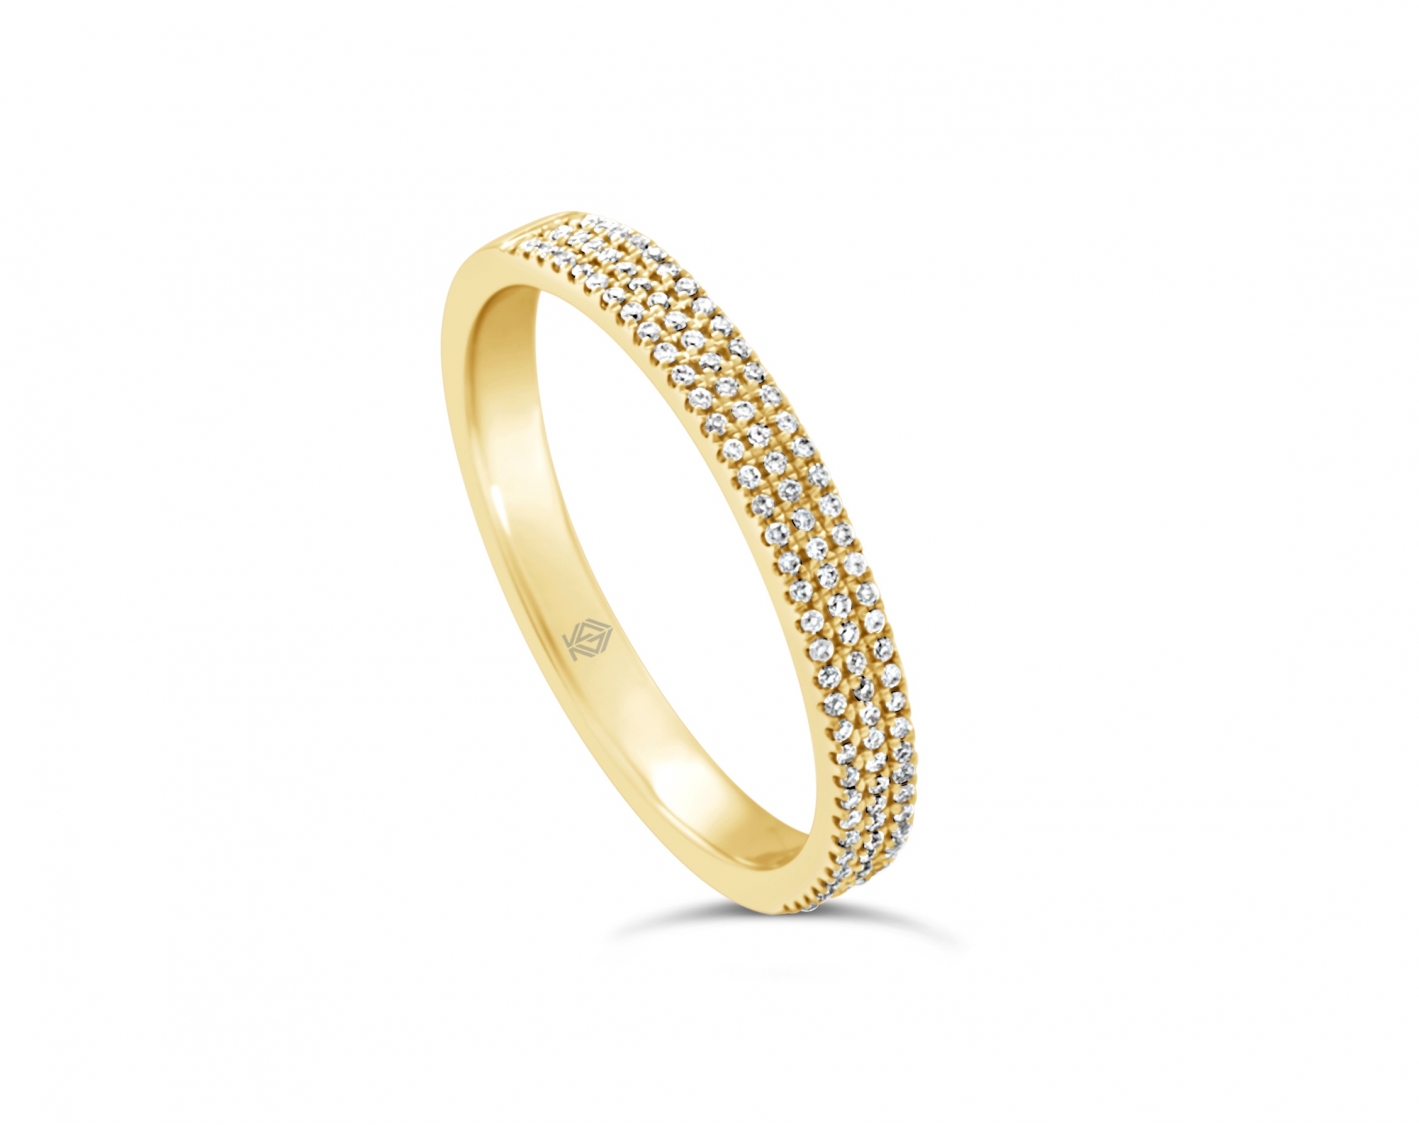 18k white gold 3-row half eternity pave set round shaped diamond wedding ring Photos & images